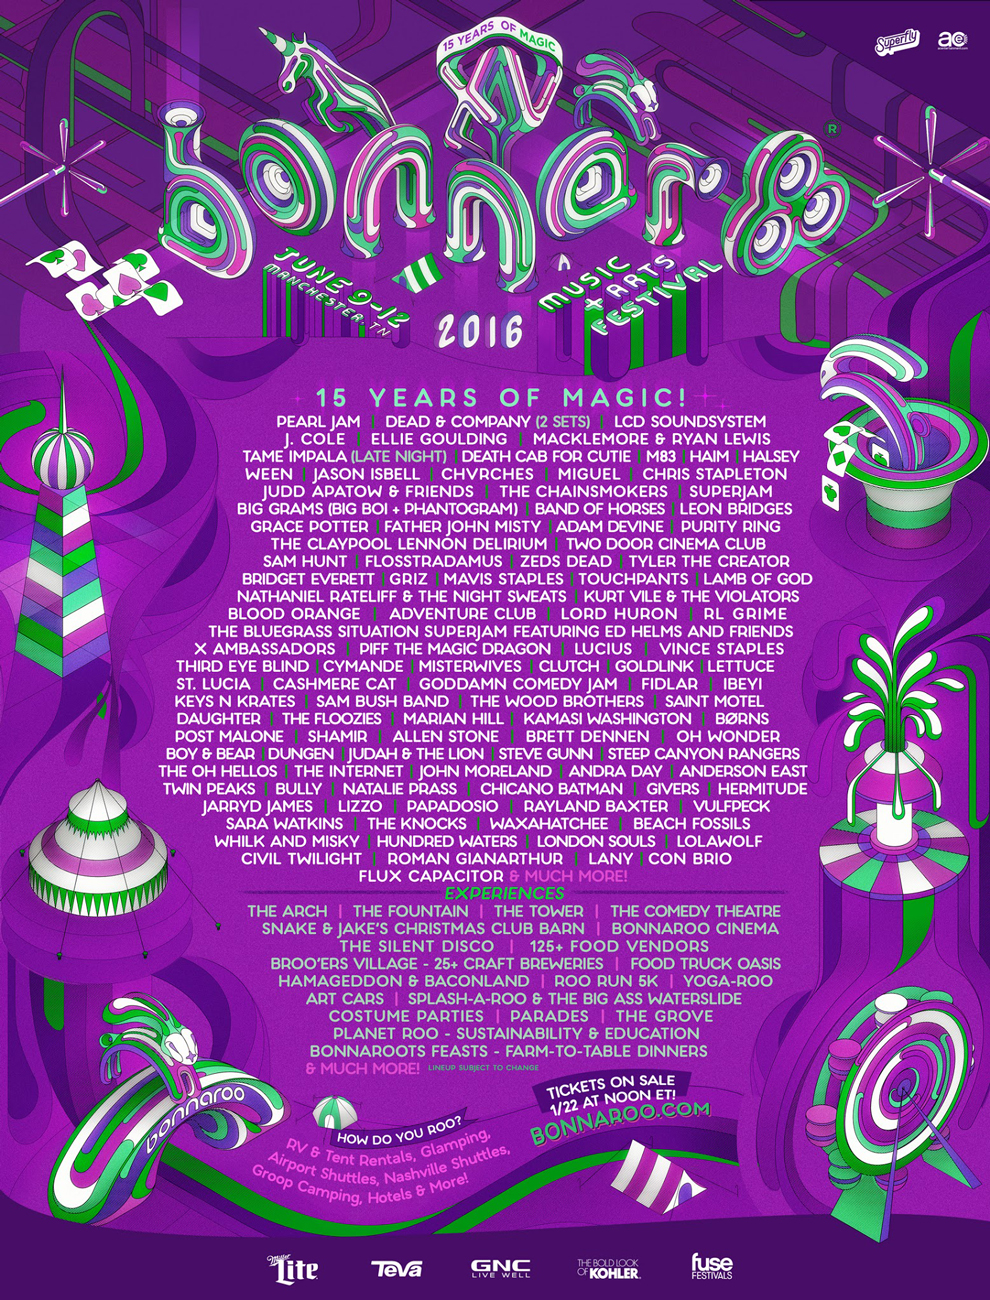 Bonnaroo Music & Arts Festival 2016 lineup. Photo by: Bonnaroo Music Festival